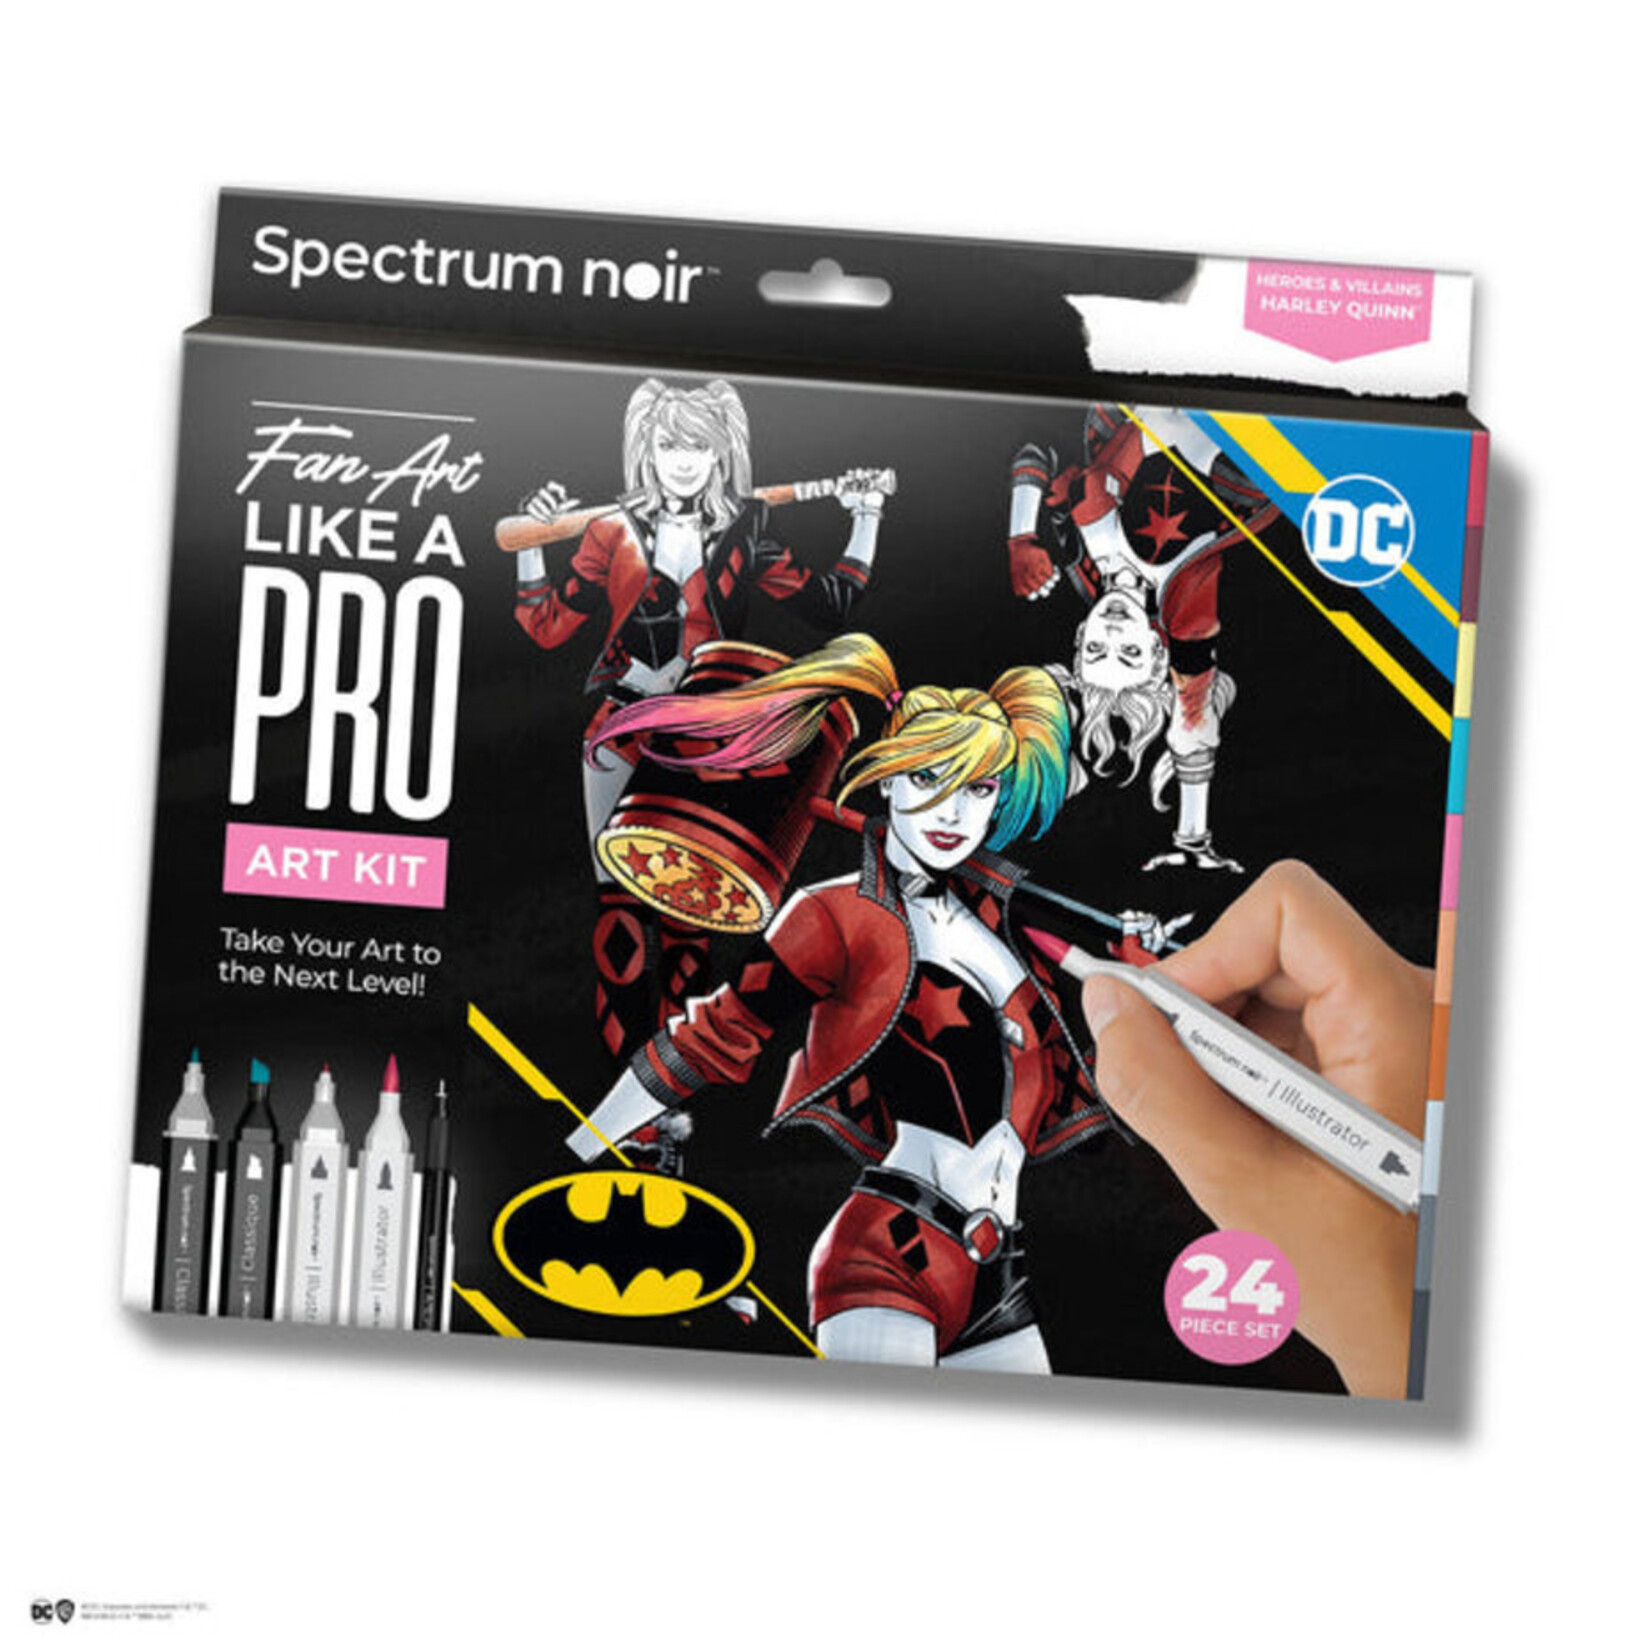 Spectrum Noir Spectrum Noir DC Comics Fan Art Like a Pro Kit Harley Quinn 24 pcs